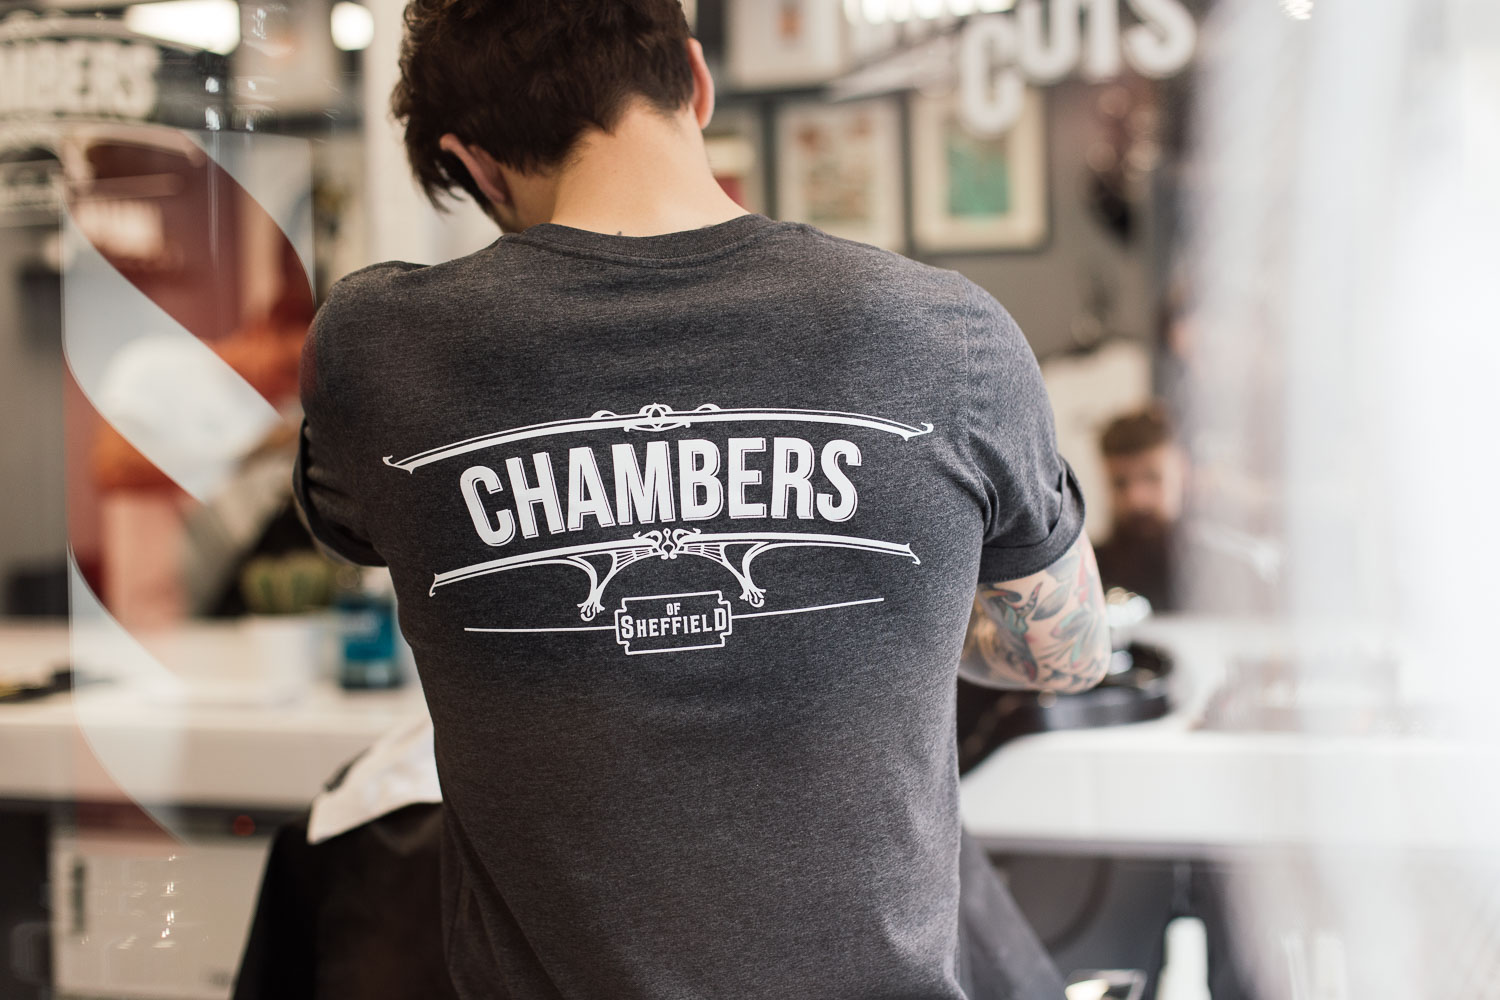 Chambers-of-Sheffield-printed-t-shirts-7798.jpg